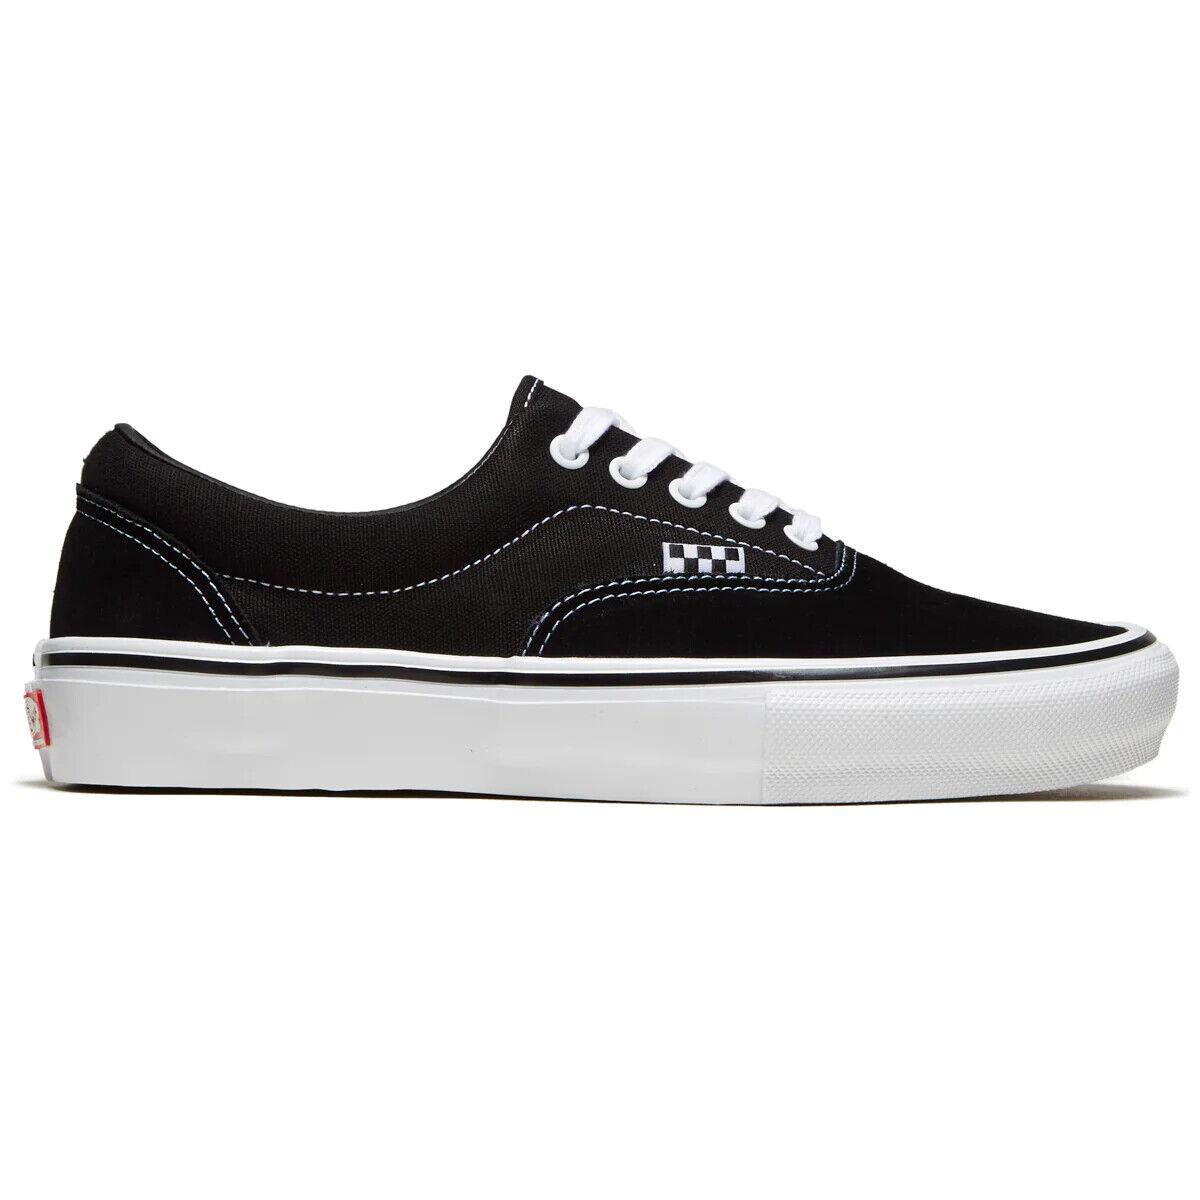 Vans Skate Era Skate Boarding Casual Shoes Black White VN0A5FC9Y28